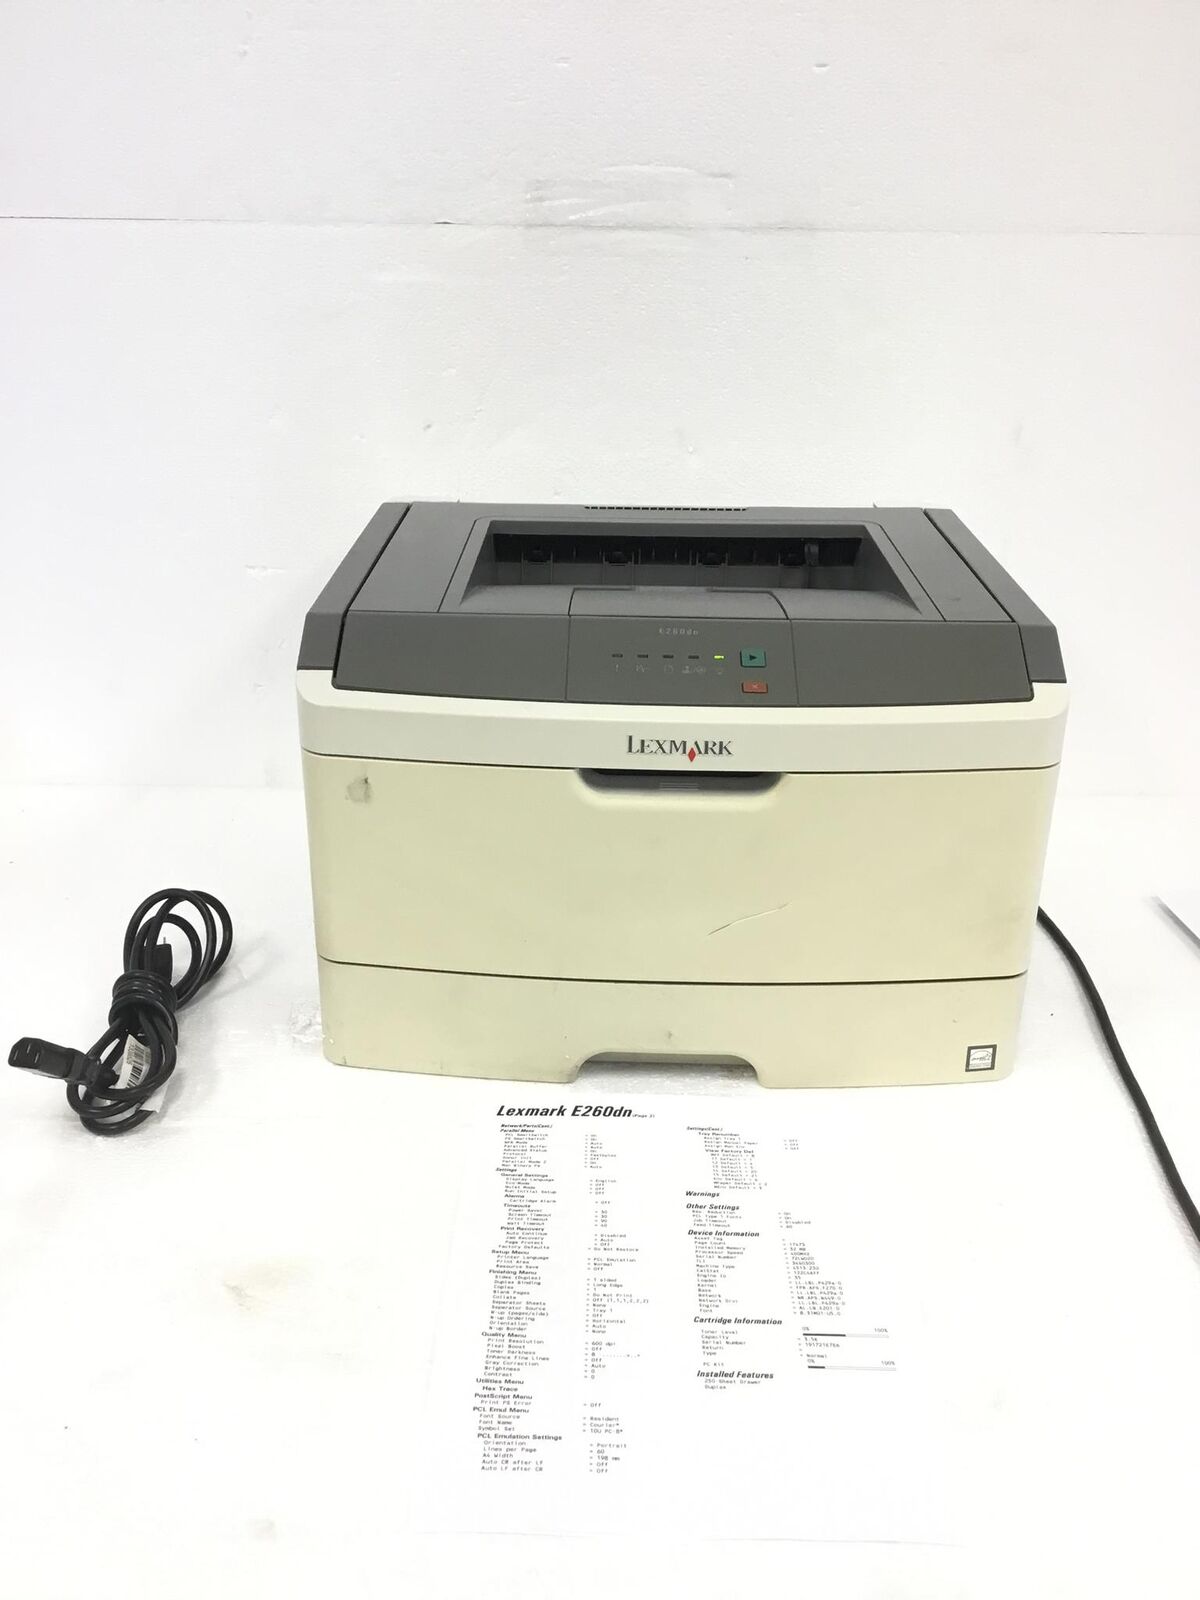 LEXMARK E260DN Monochrome Laser Printer w/Toner,Duplex,17K Pages Printed,WORKS